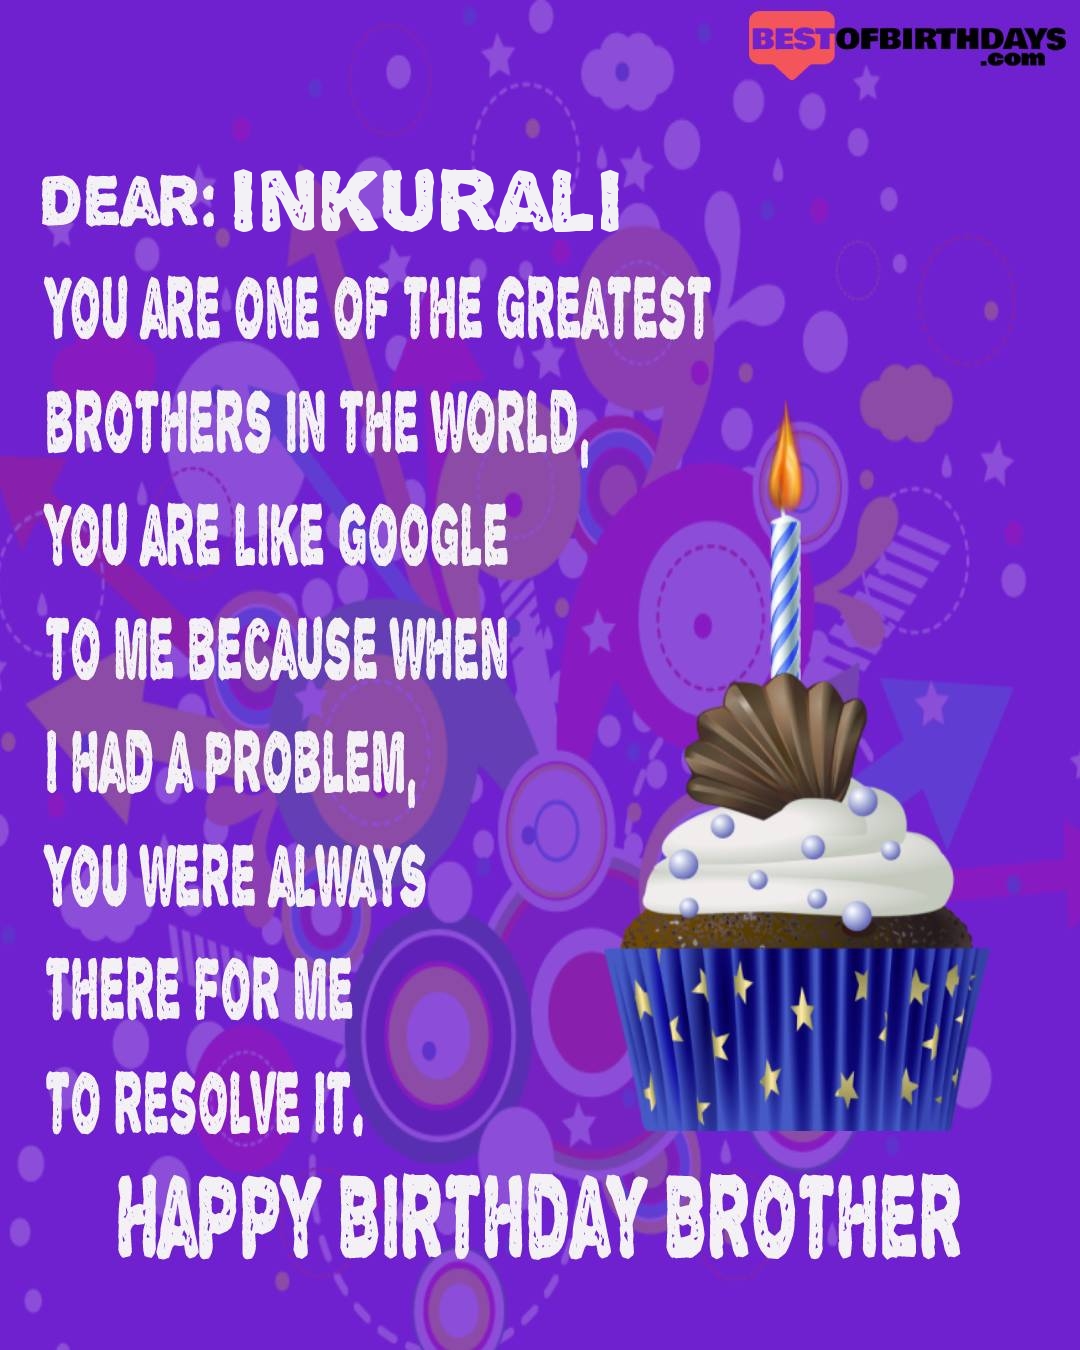 Happy birthday inkurali bhai brother bro